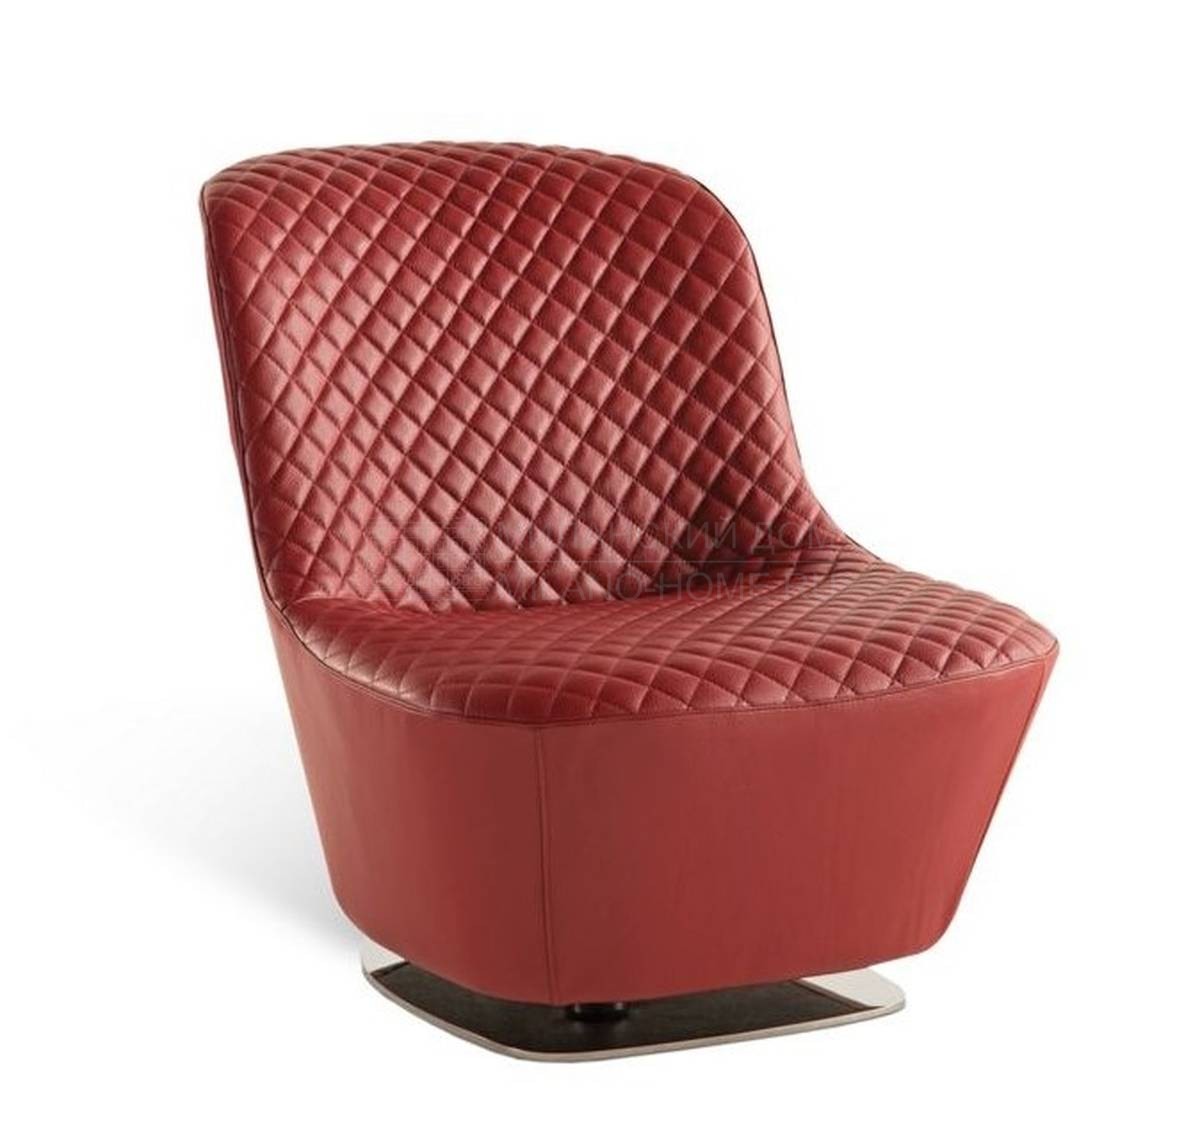 Кожаное кресло Badiane armchair из Франции фабрики ROCHE BOBOIS